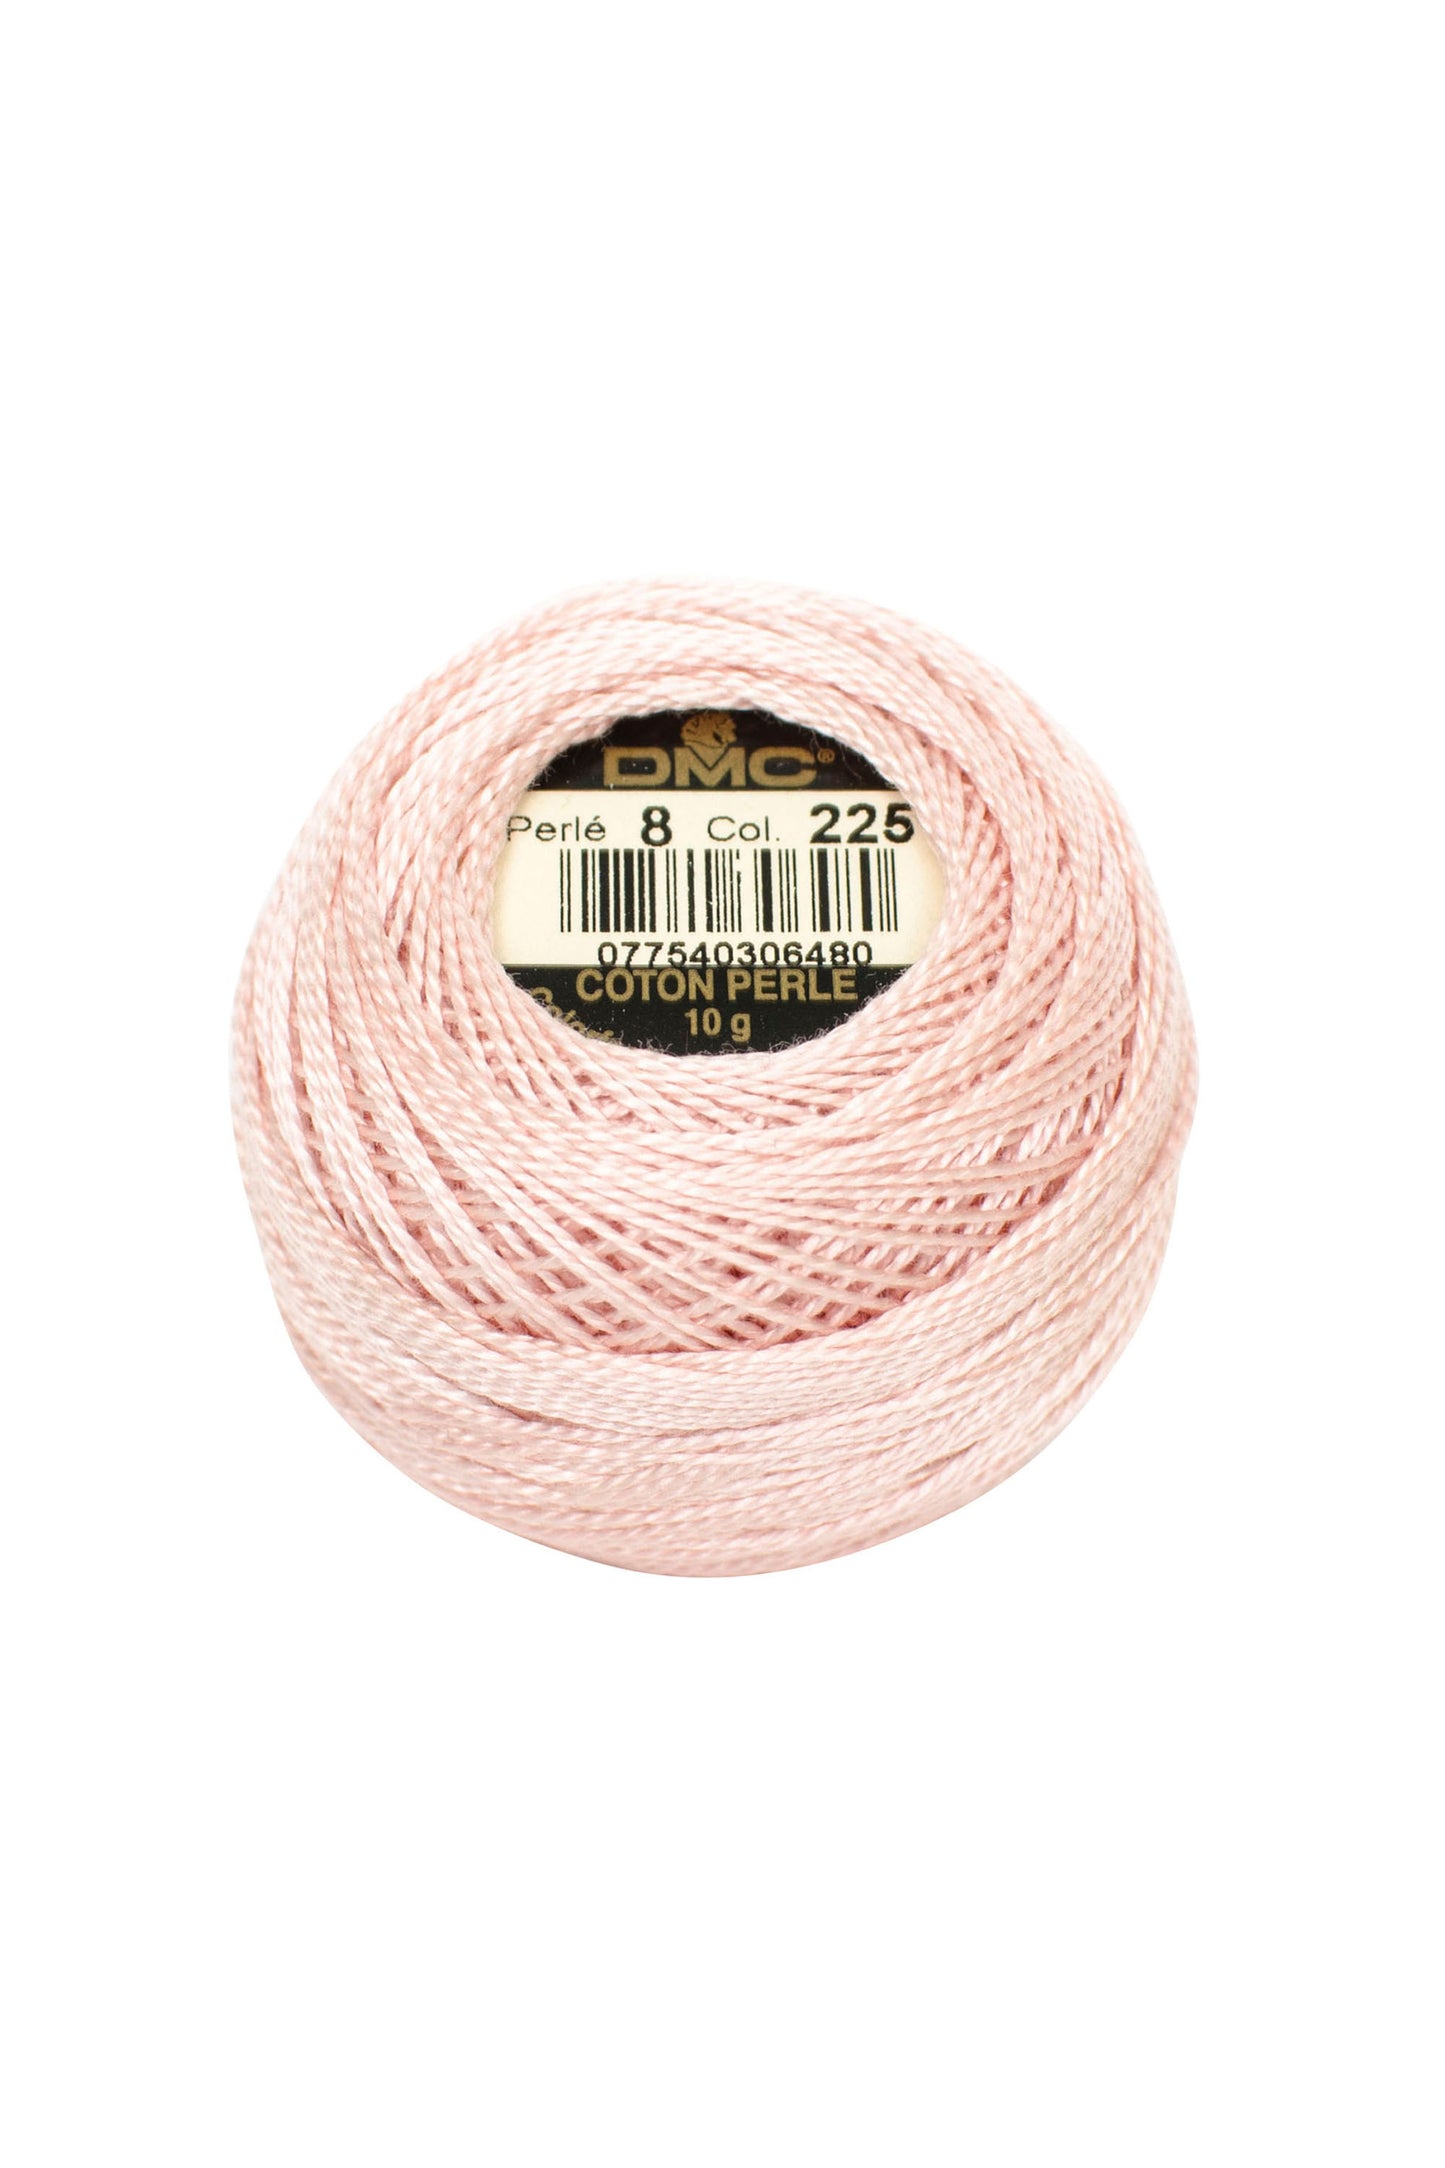 225 Ultra Very Light Shell Pink - DMC #8 Perle Cotton Ball